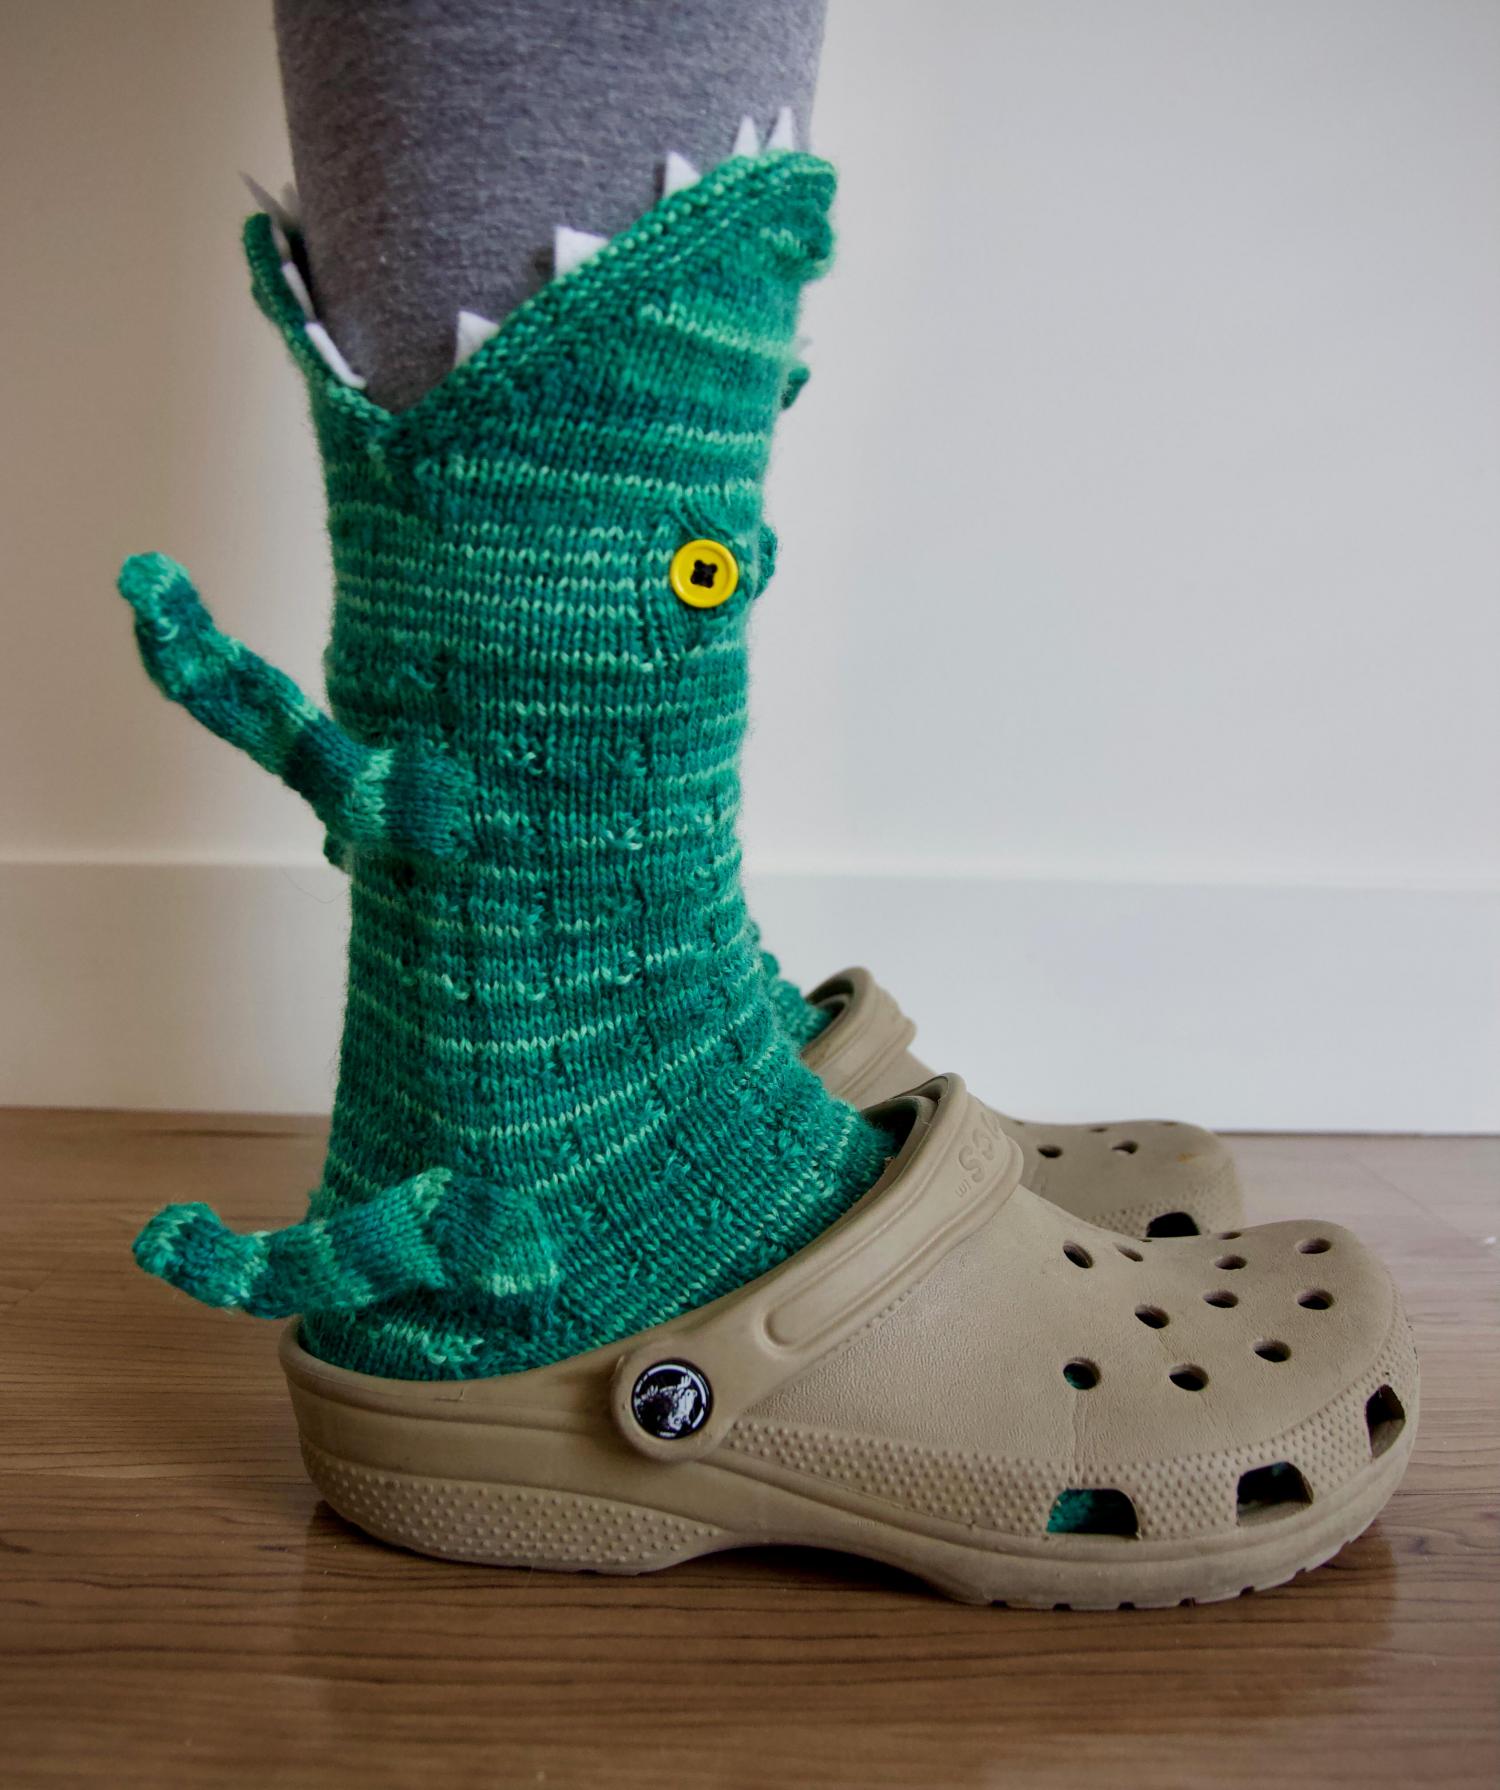 Crocodile socks in croc shoes